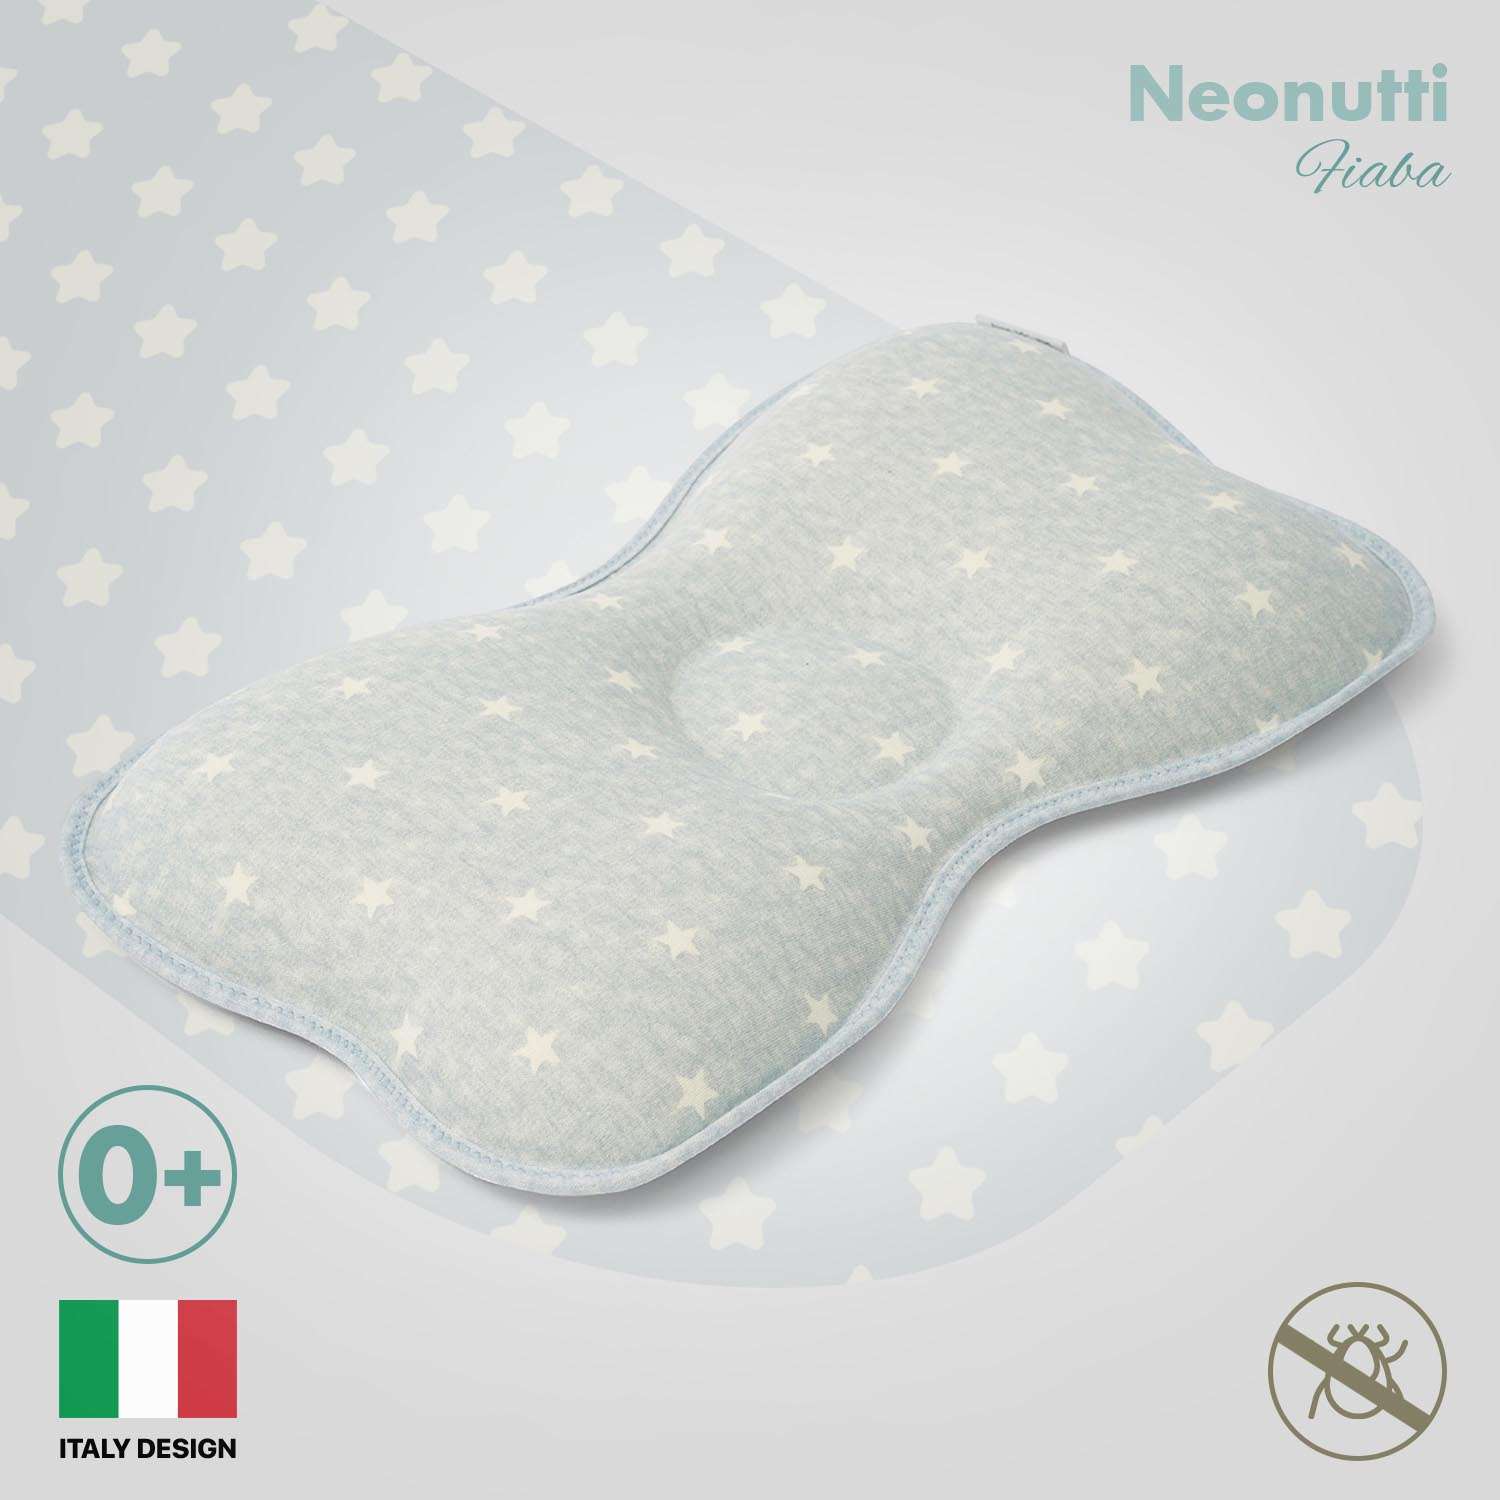 Подушка для новорожденного Nuovita Neonutti Fiaba Dipinto Серая - фото 2